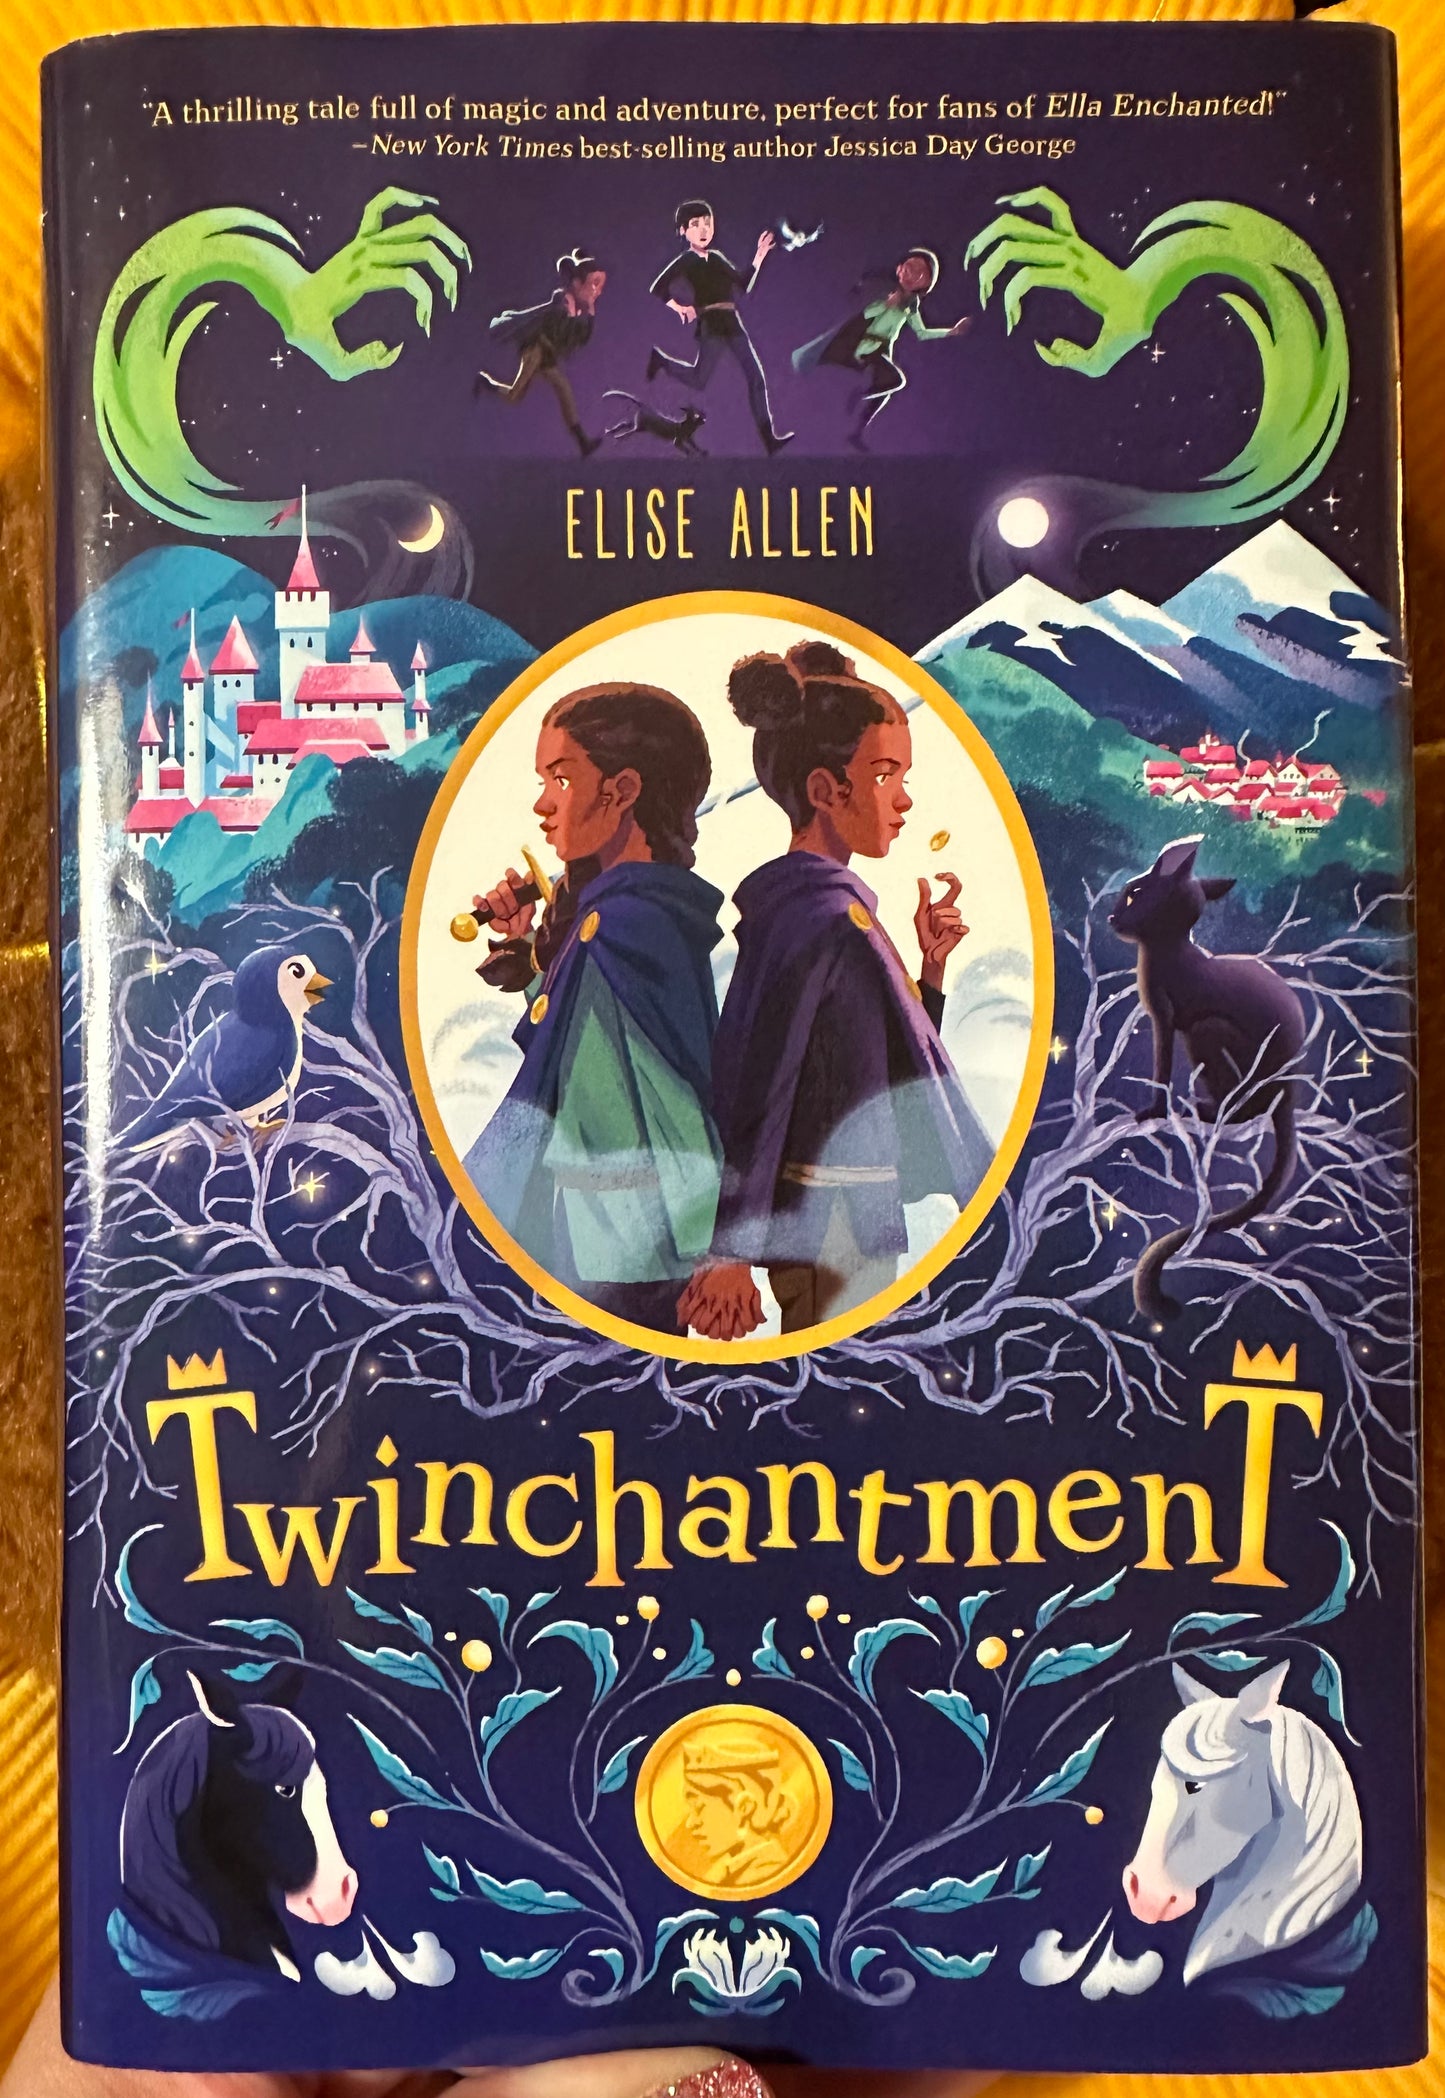 Twinchantment by Elise Allen